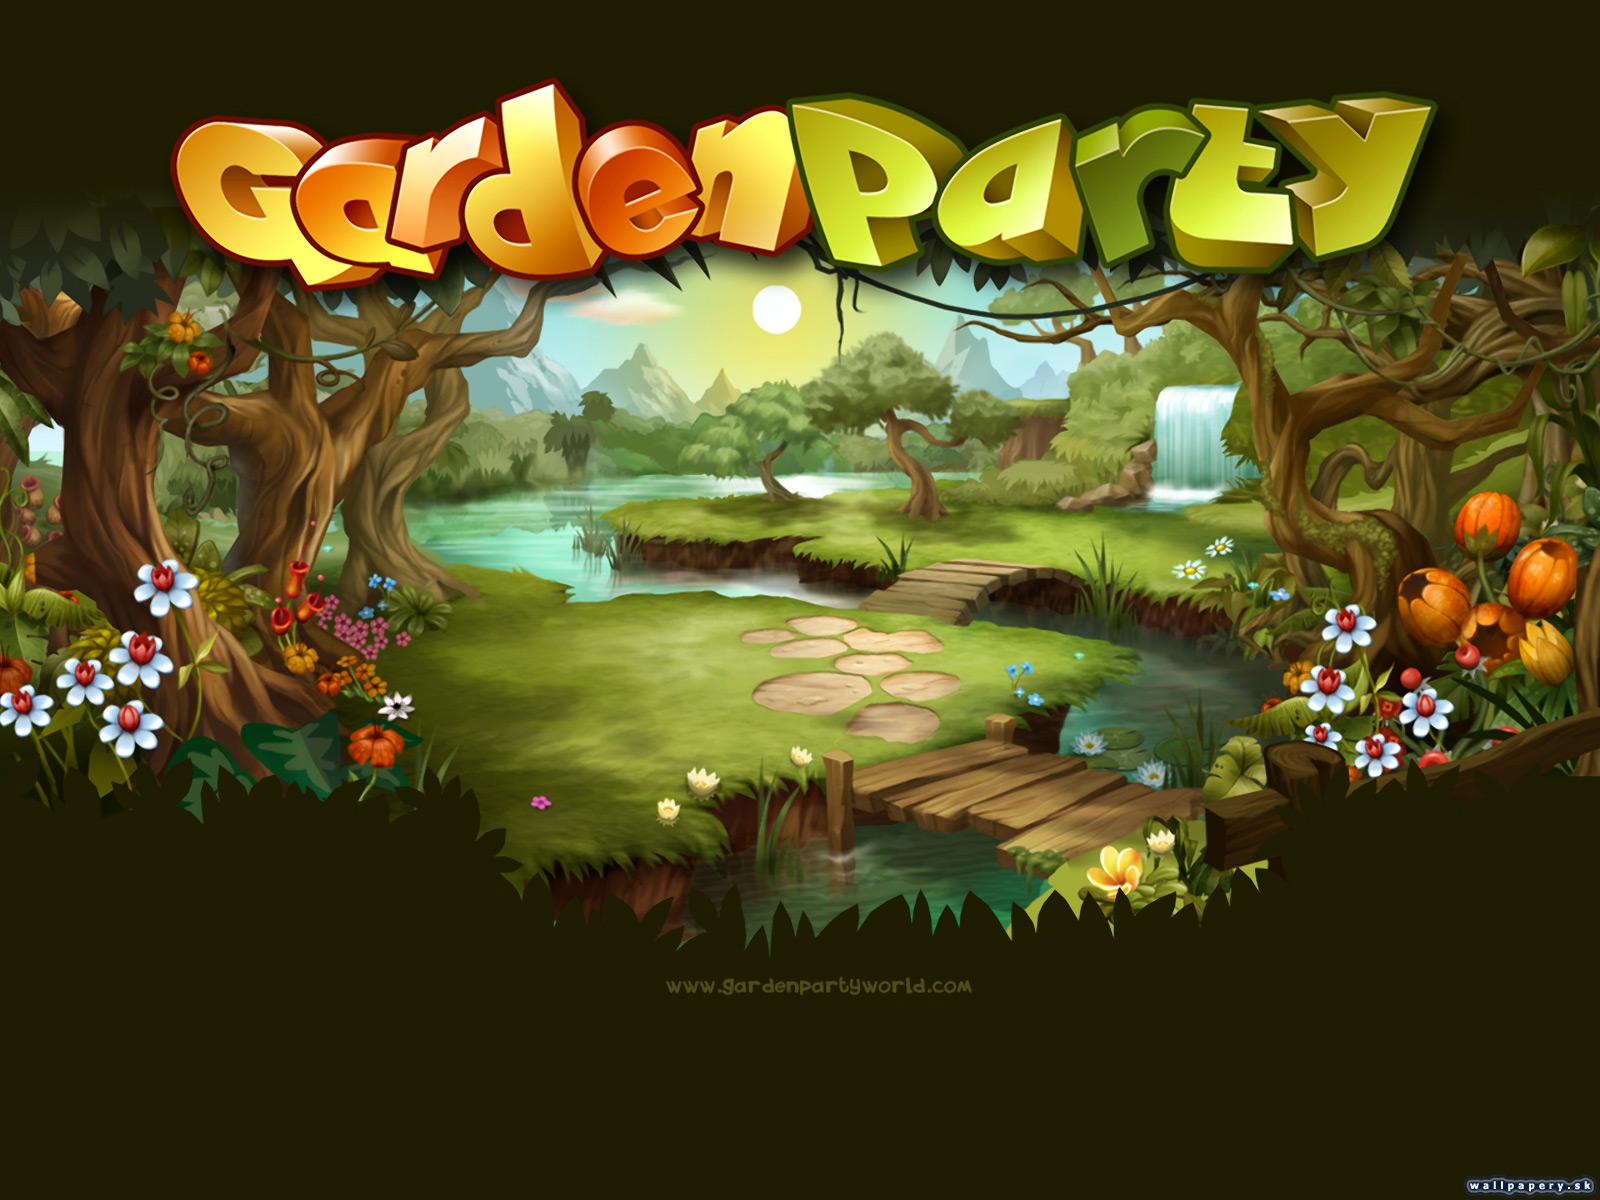 Garden Party World - wallpaper 1